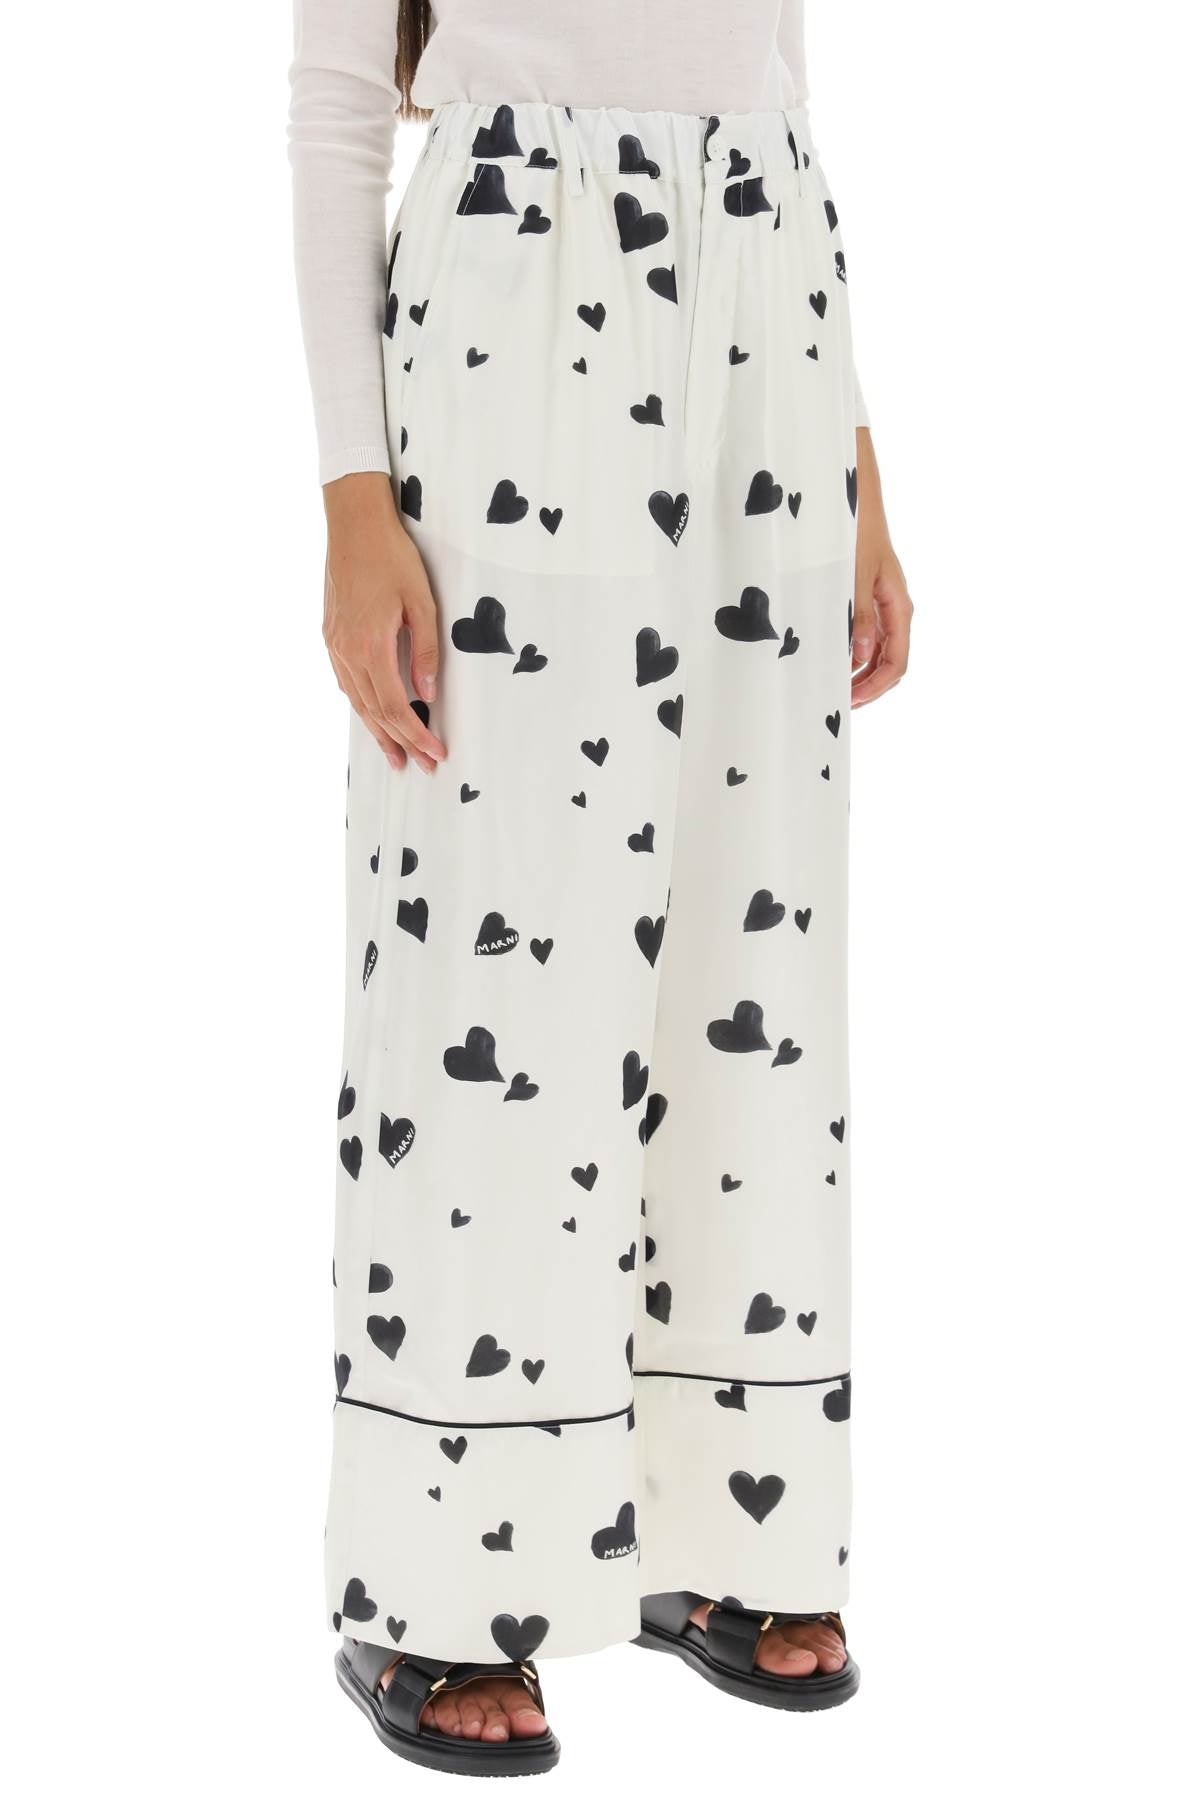 Marni pajama pants with bunch of hearts motif-1